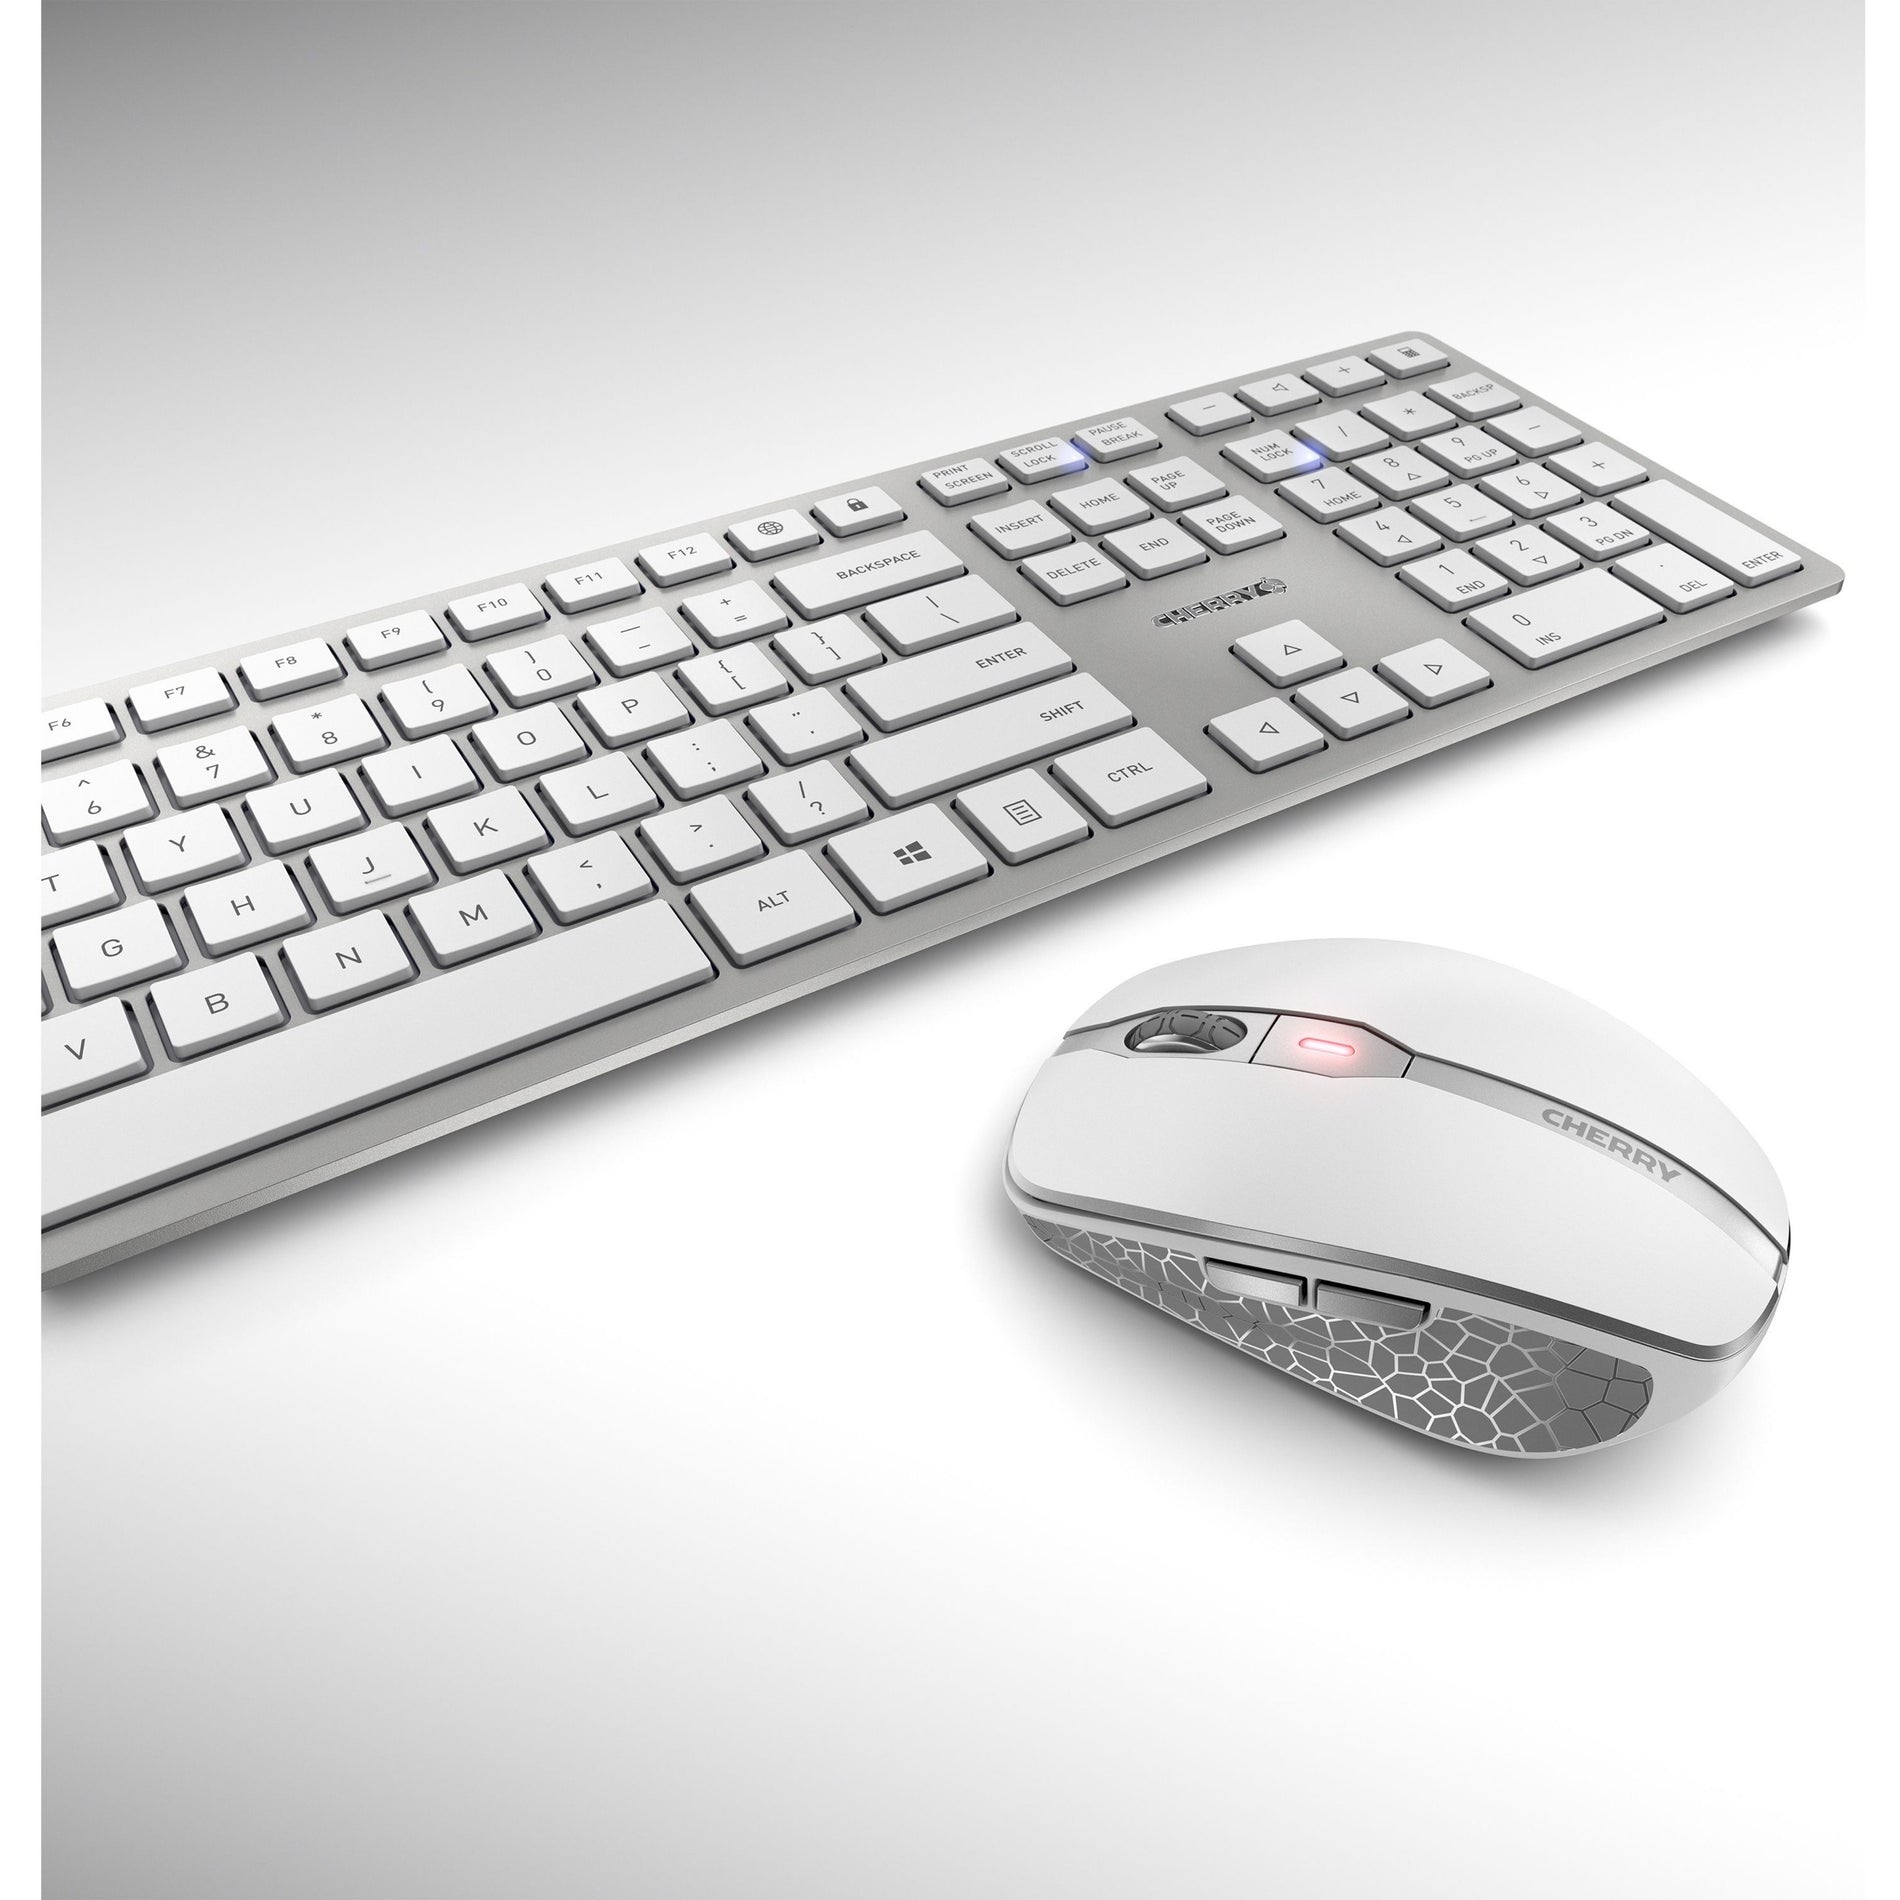 JD-9100US-1: JD-9100US-1  DW 9100 SLIM: SOTTILE 9100  Rechargeable: RICARICABILE  Wireless: SENZA FILI  Desktop: DESKTOP  Keyboard: TASTIERA  Mouse: MOUSE  Combo: COMBINAZIONE  Silver/White: ARGENTO/BIANCO  USB: USB